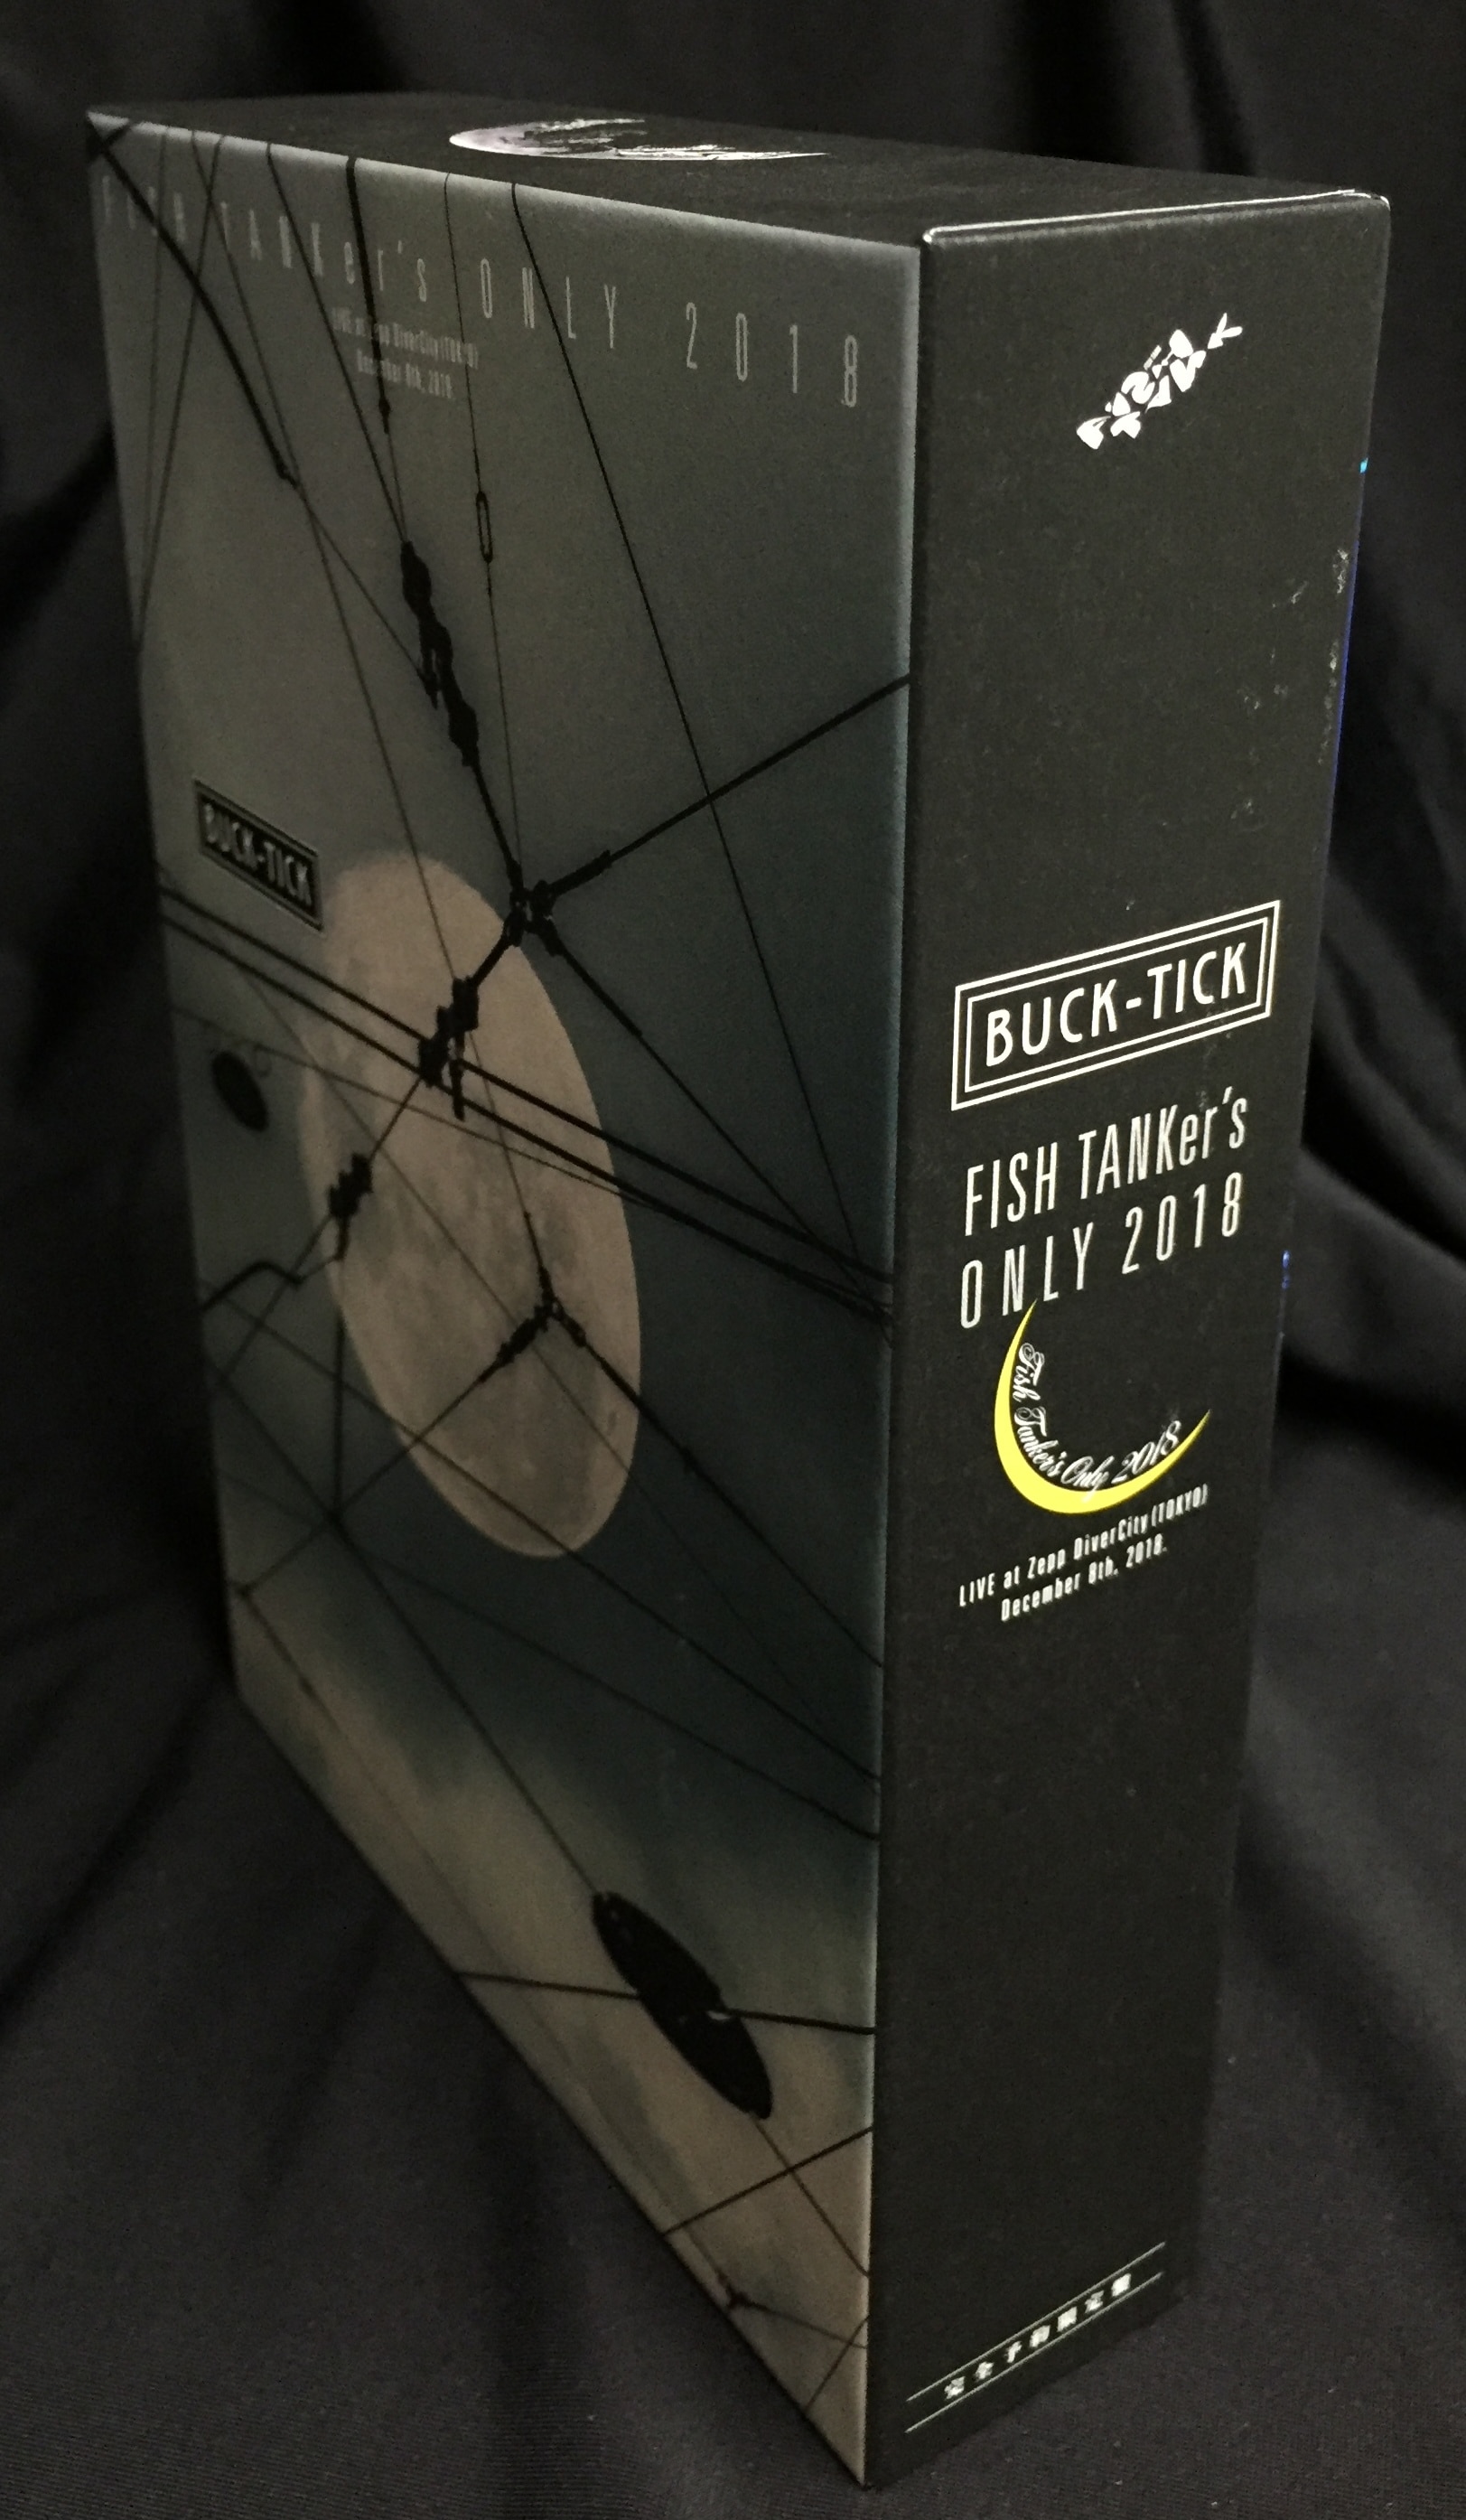 BUCK-TICK 完全予約限定盤(2Blu-ray+2CD) FISH TANKer's ONLY 2018